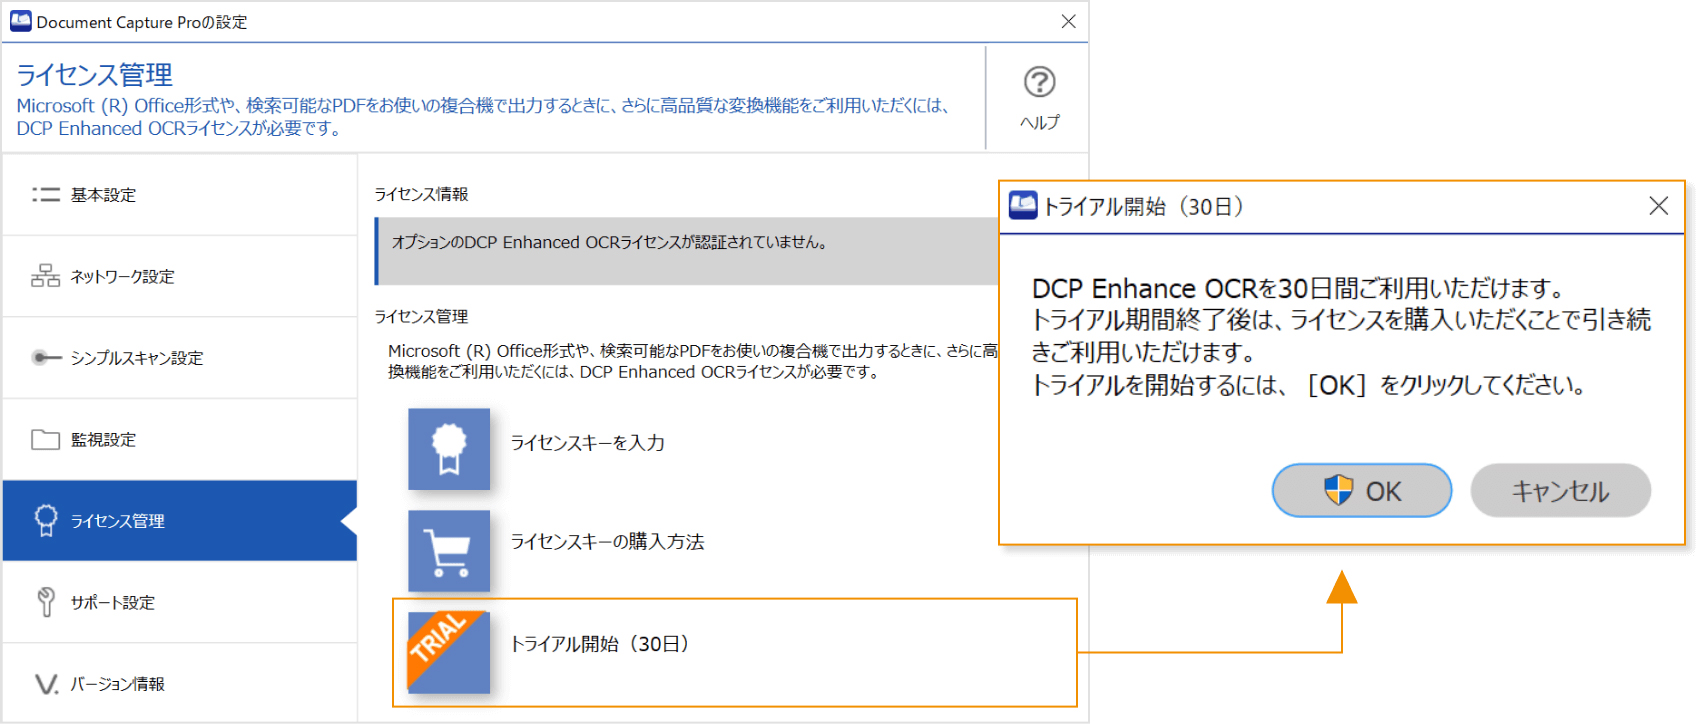 Document Capture Pro Enhanced OCR 30日間トライアル（複合機のみ）